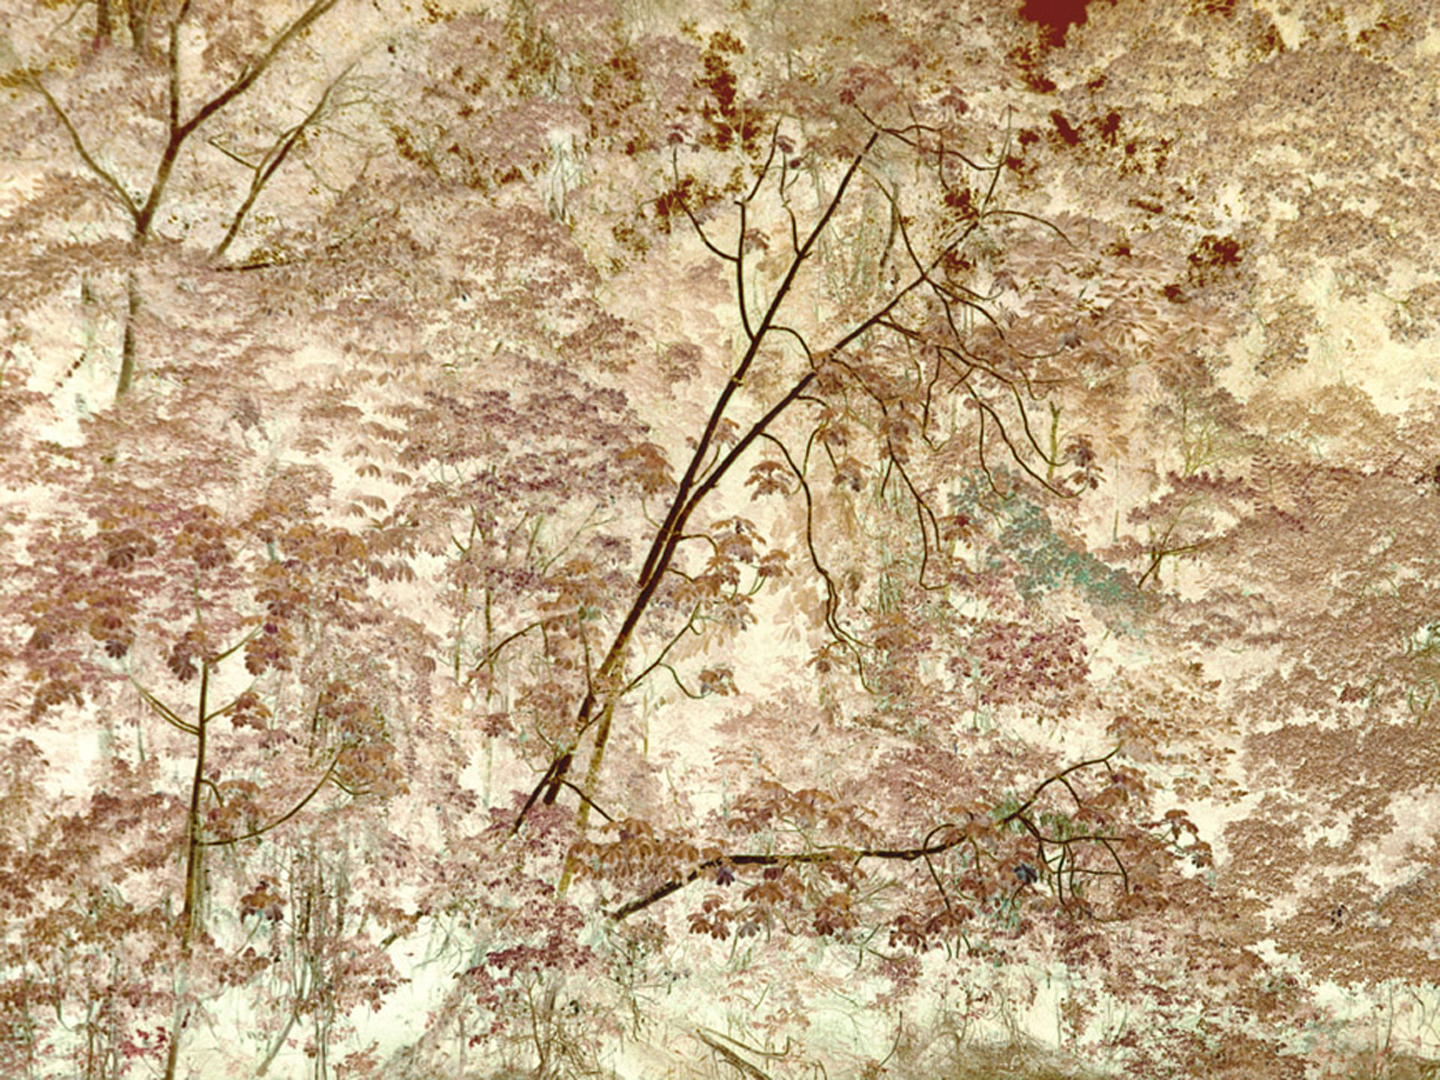   Bending Tree,  Tiputini River,&nbsp;Ecuador, 2009  Archival ink jet print on Masa paper  30” x 40” 